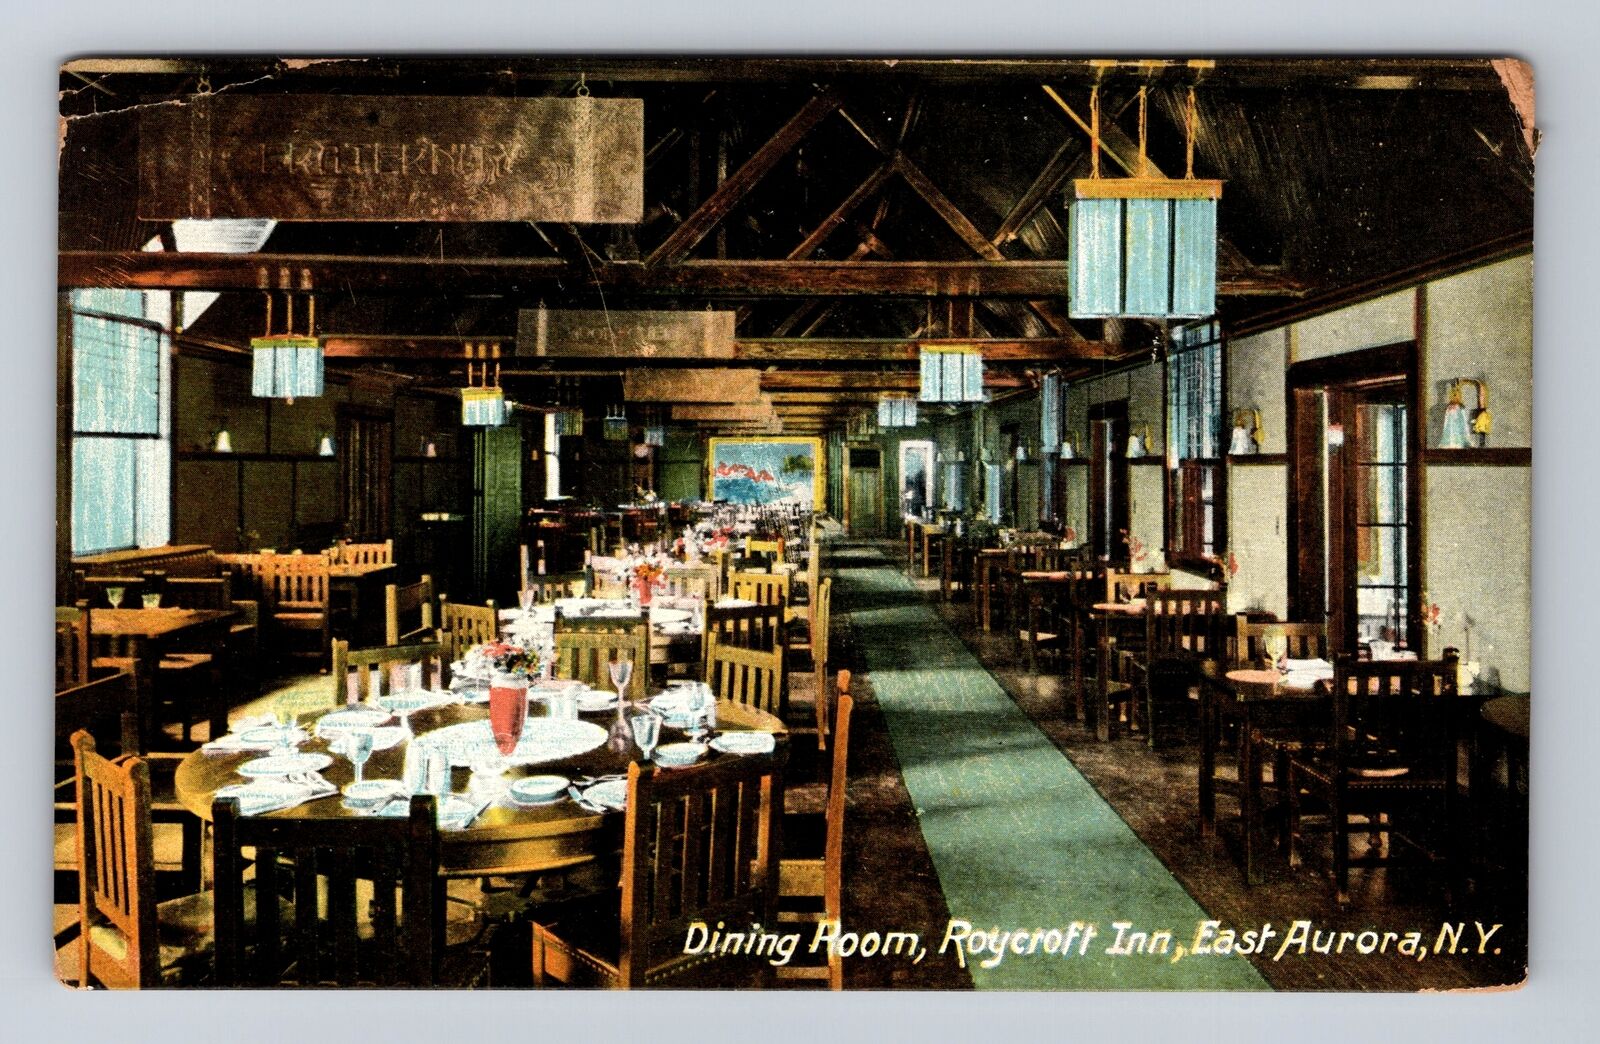 East Aurora NY-New York, Roycroft Inn, Dining Room, Vintage c1915 Postcard